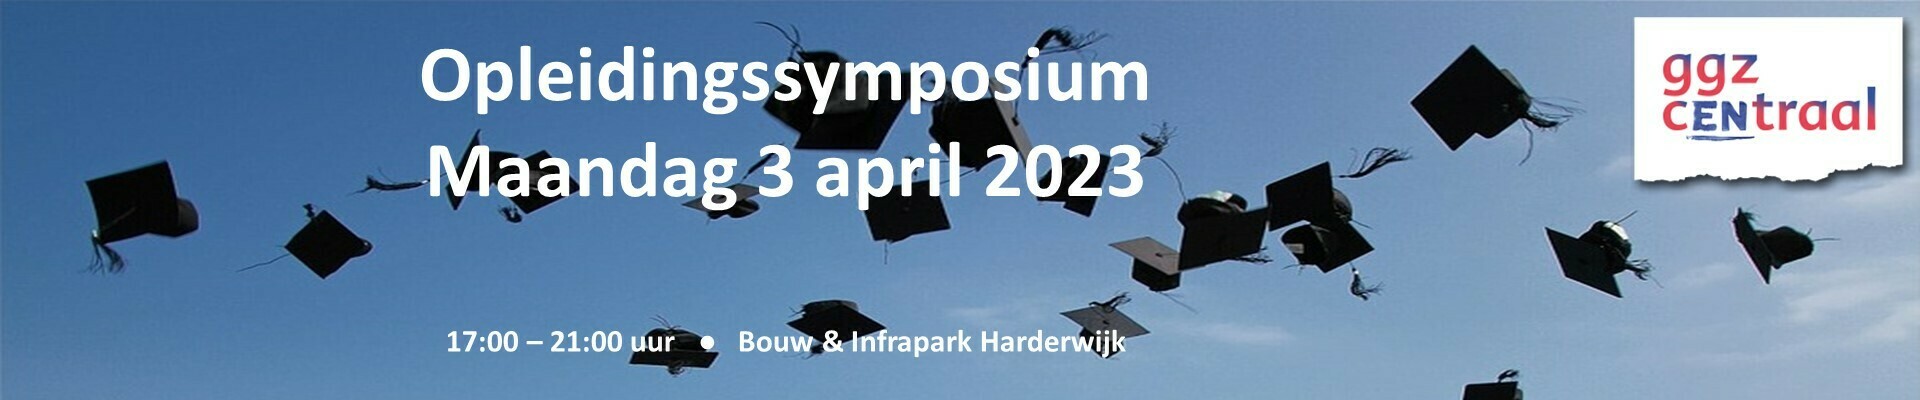 Opleidingssymposium 3 april 2023